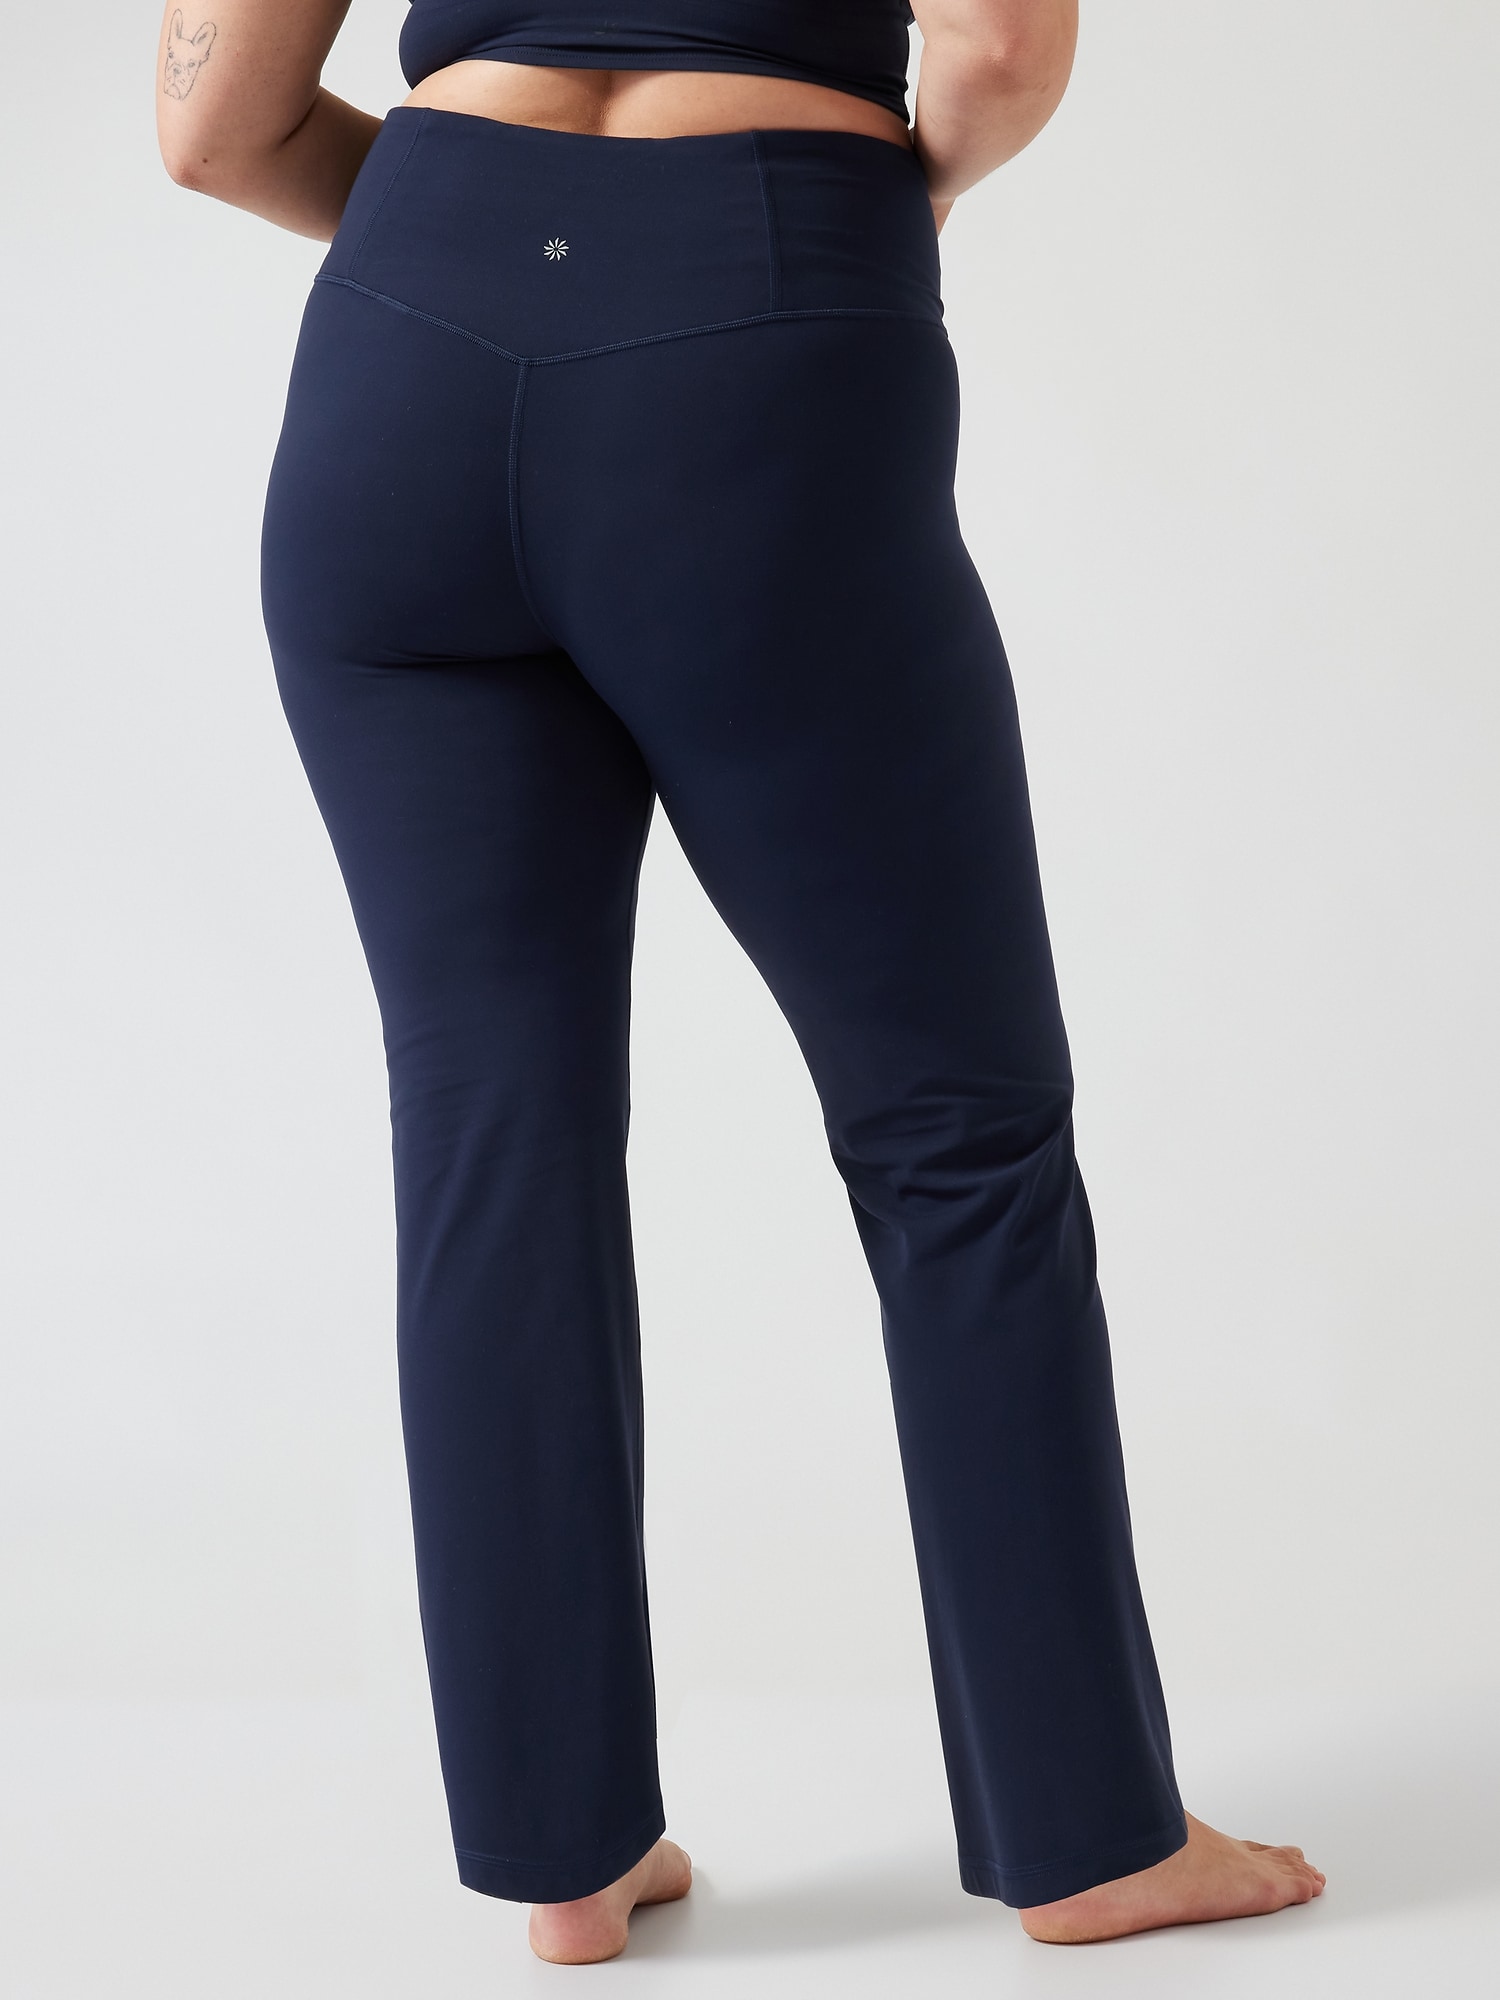 ATHLETA Elation Flare Pant PLUS 1X Blue Star, SOFT High-Rise Yoga Pants NWT  NEW